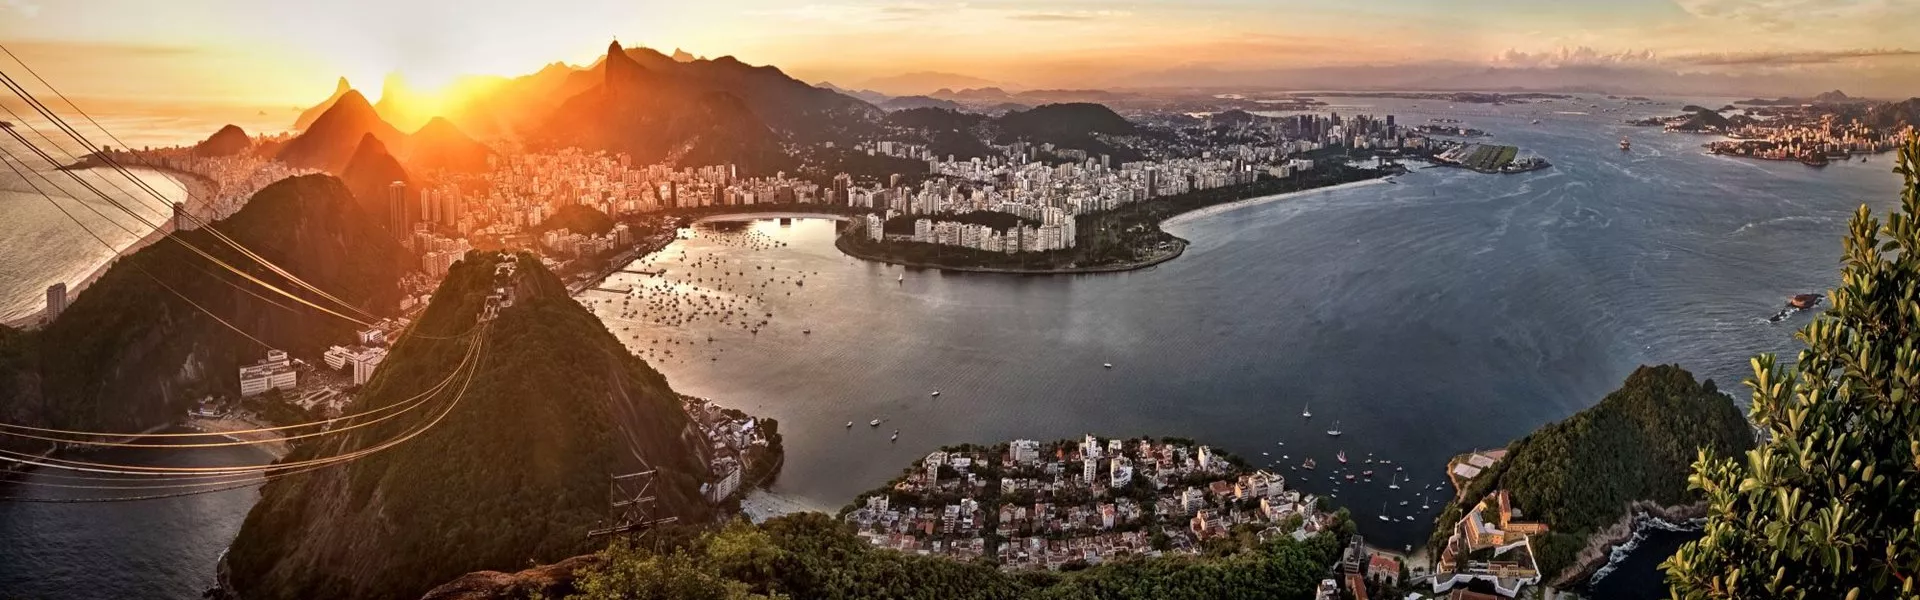 The sun is setting over the city of Rio De Janeiro